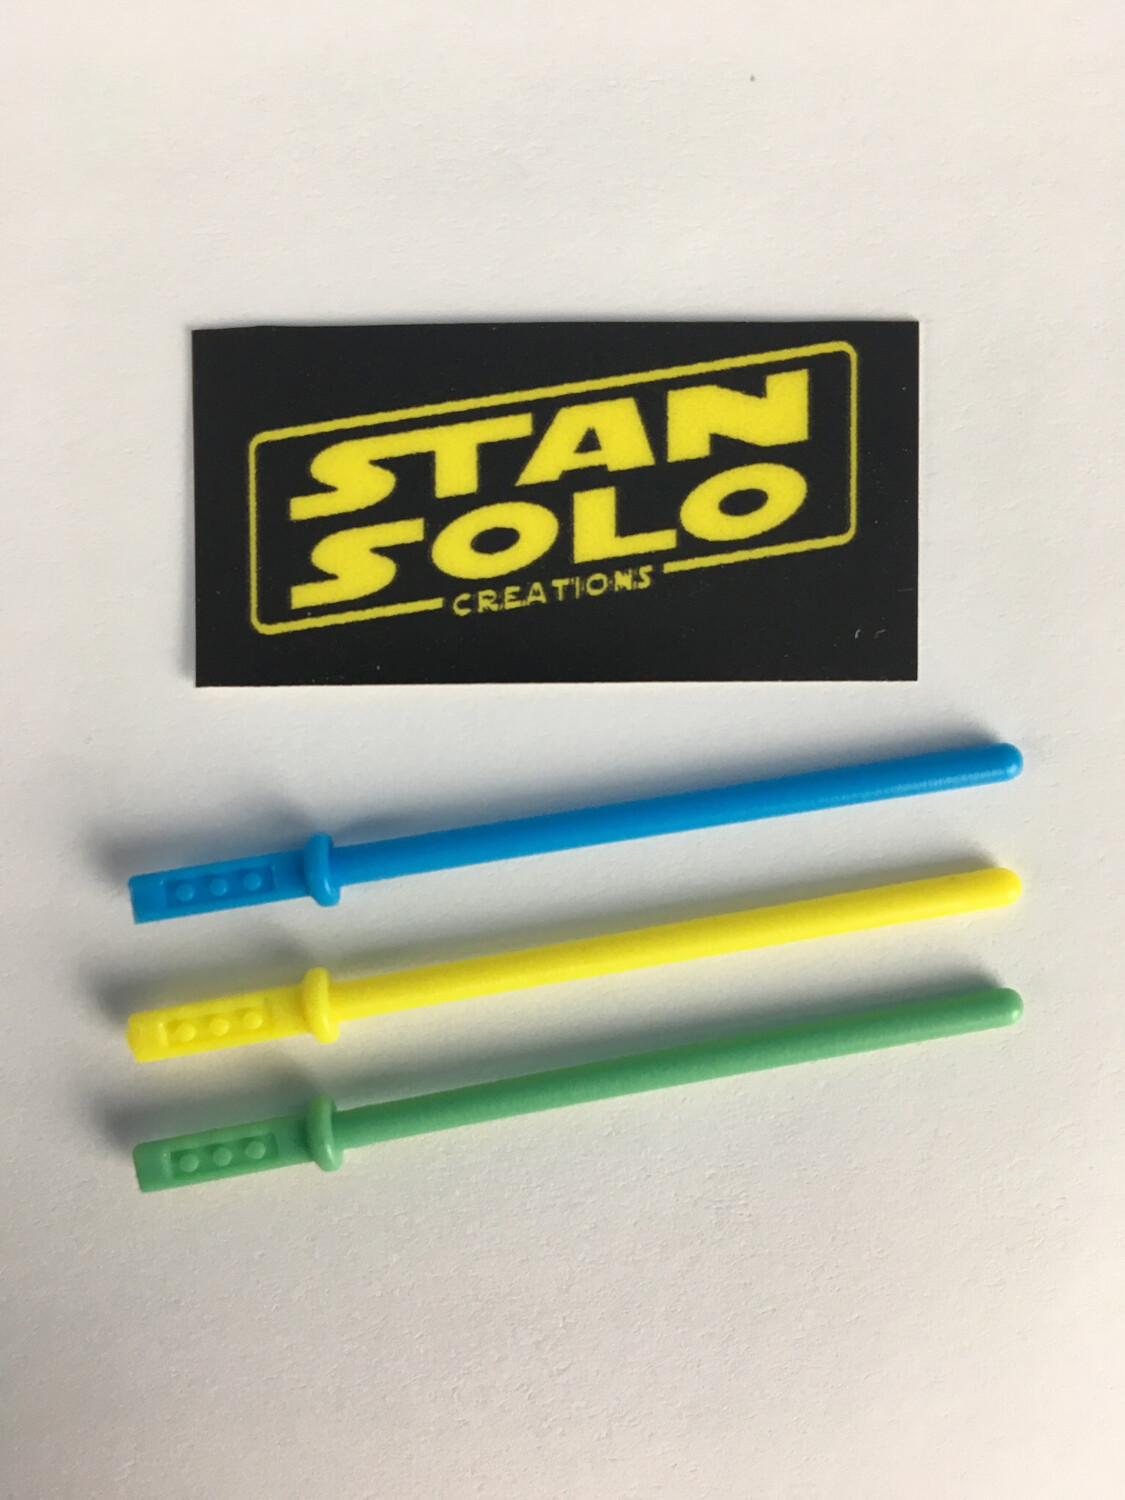 Stan Solo Custom Jedi Lightsabers Set Of 3